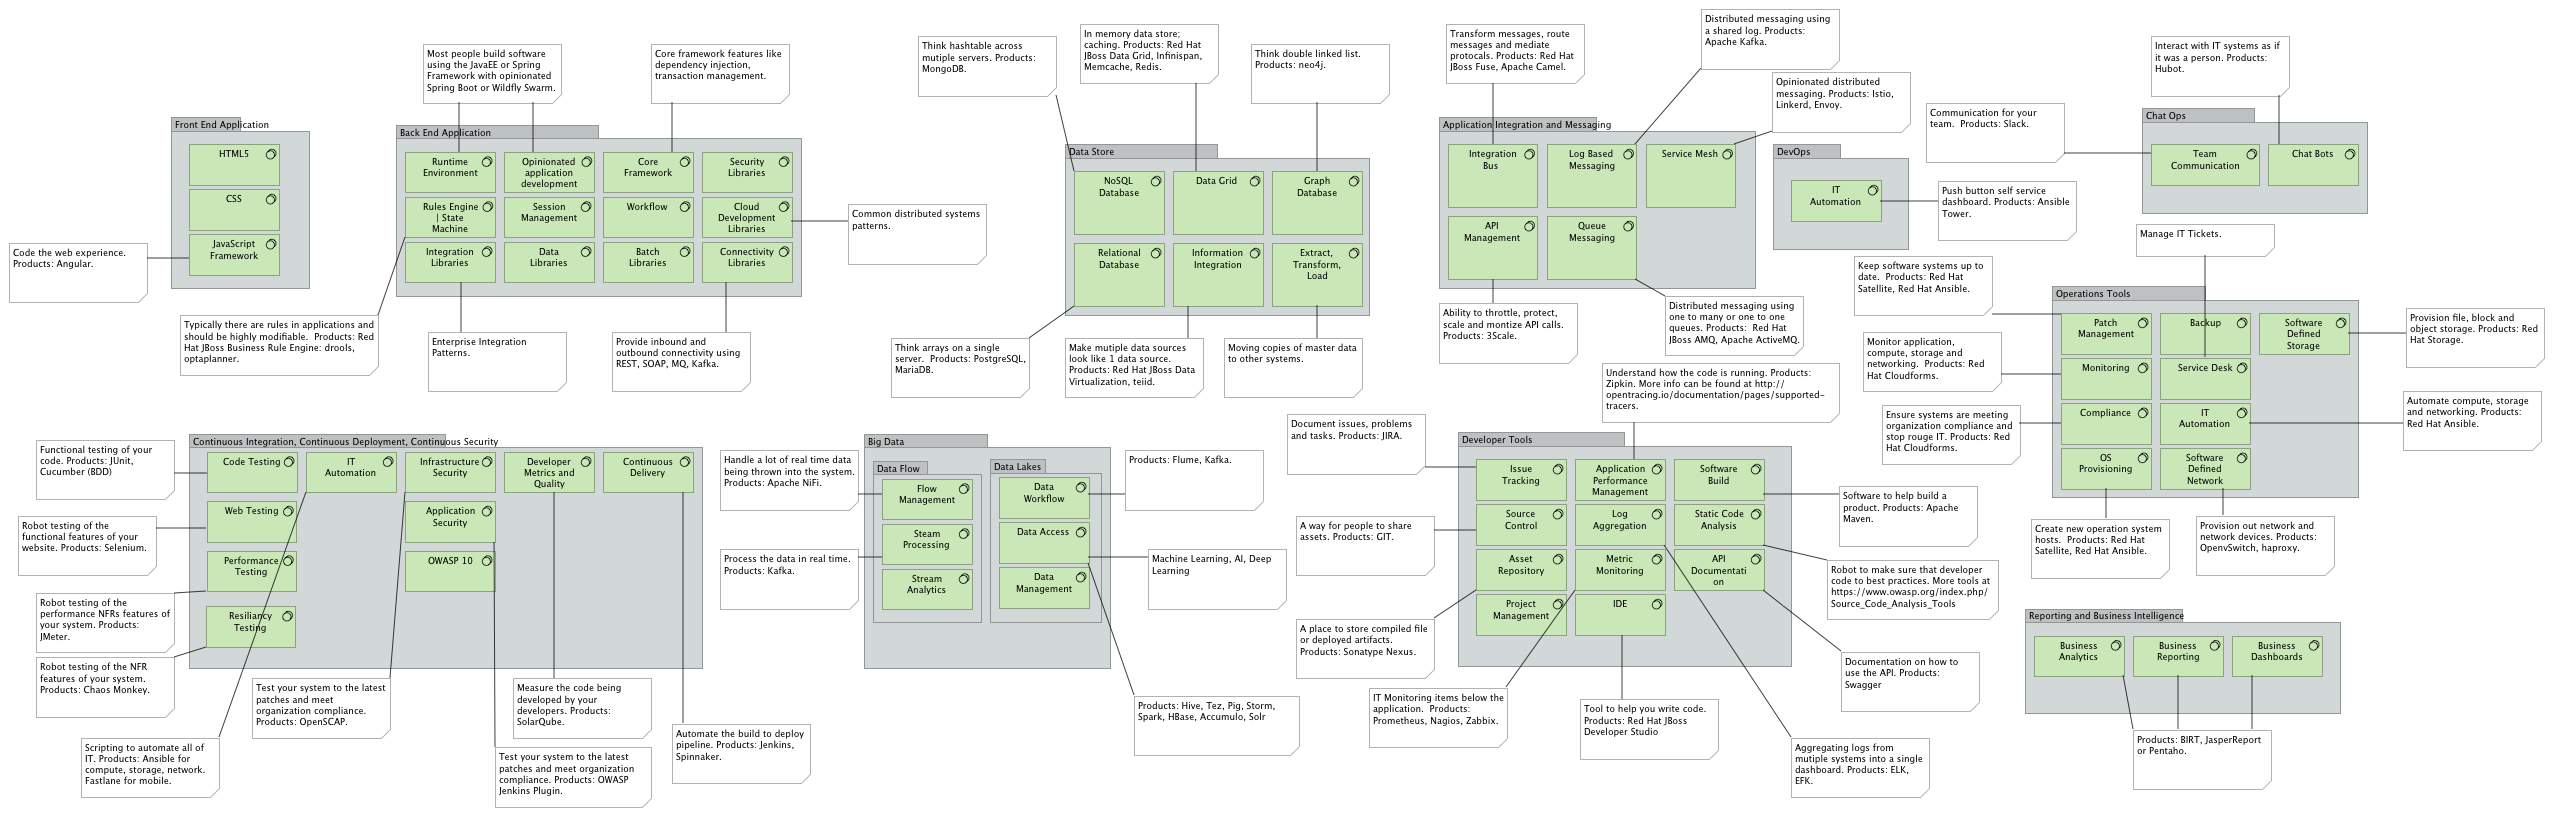 Component Model: Cloud Native Applications Software Stack